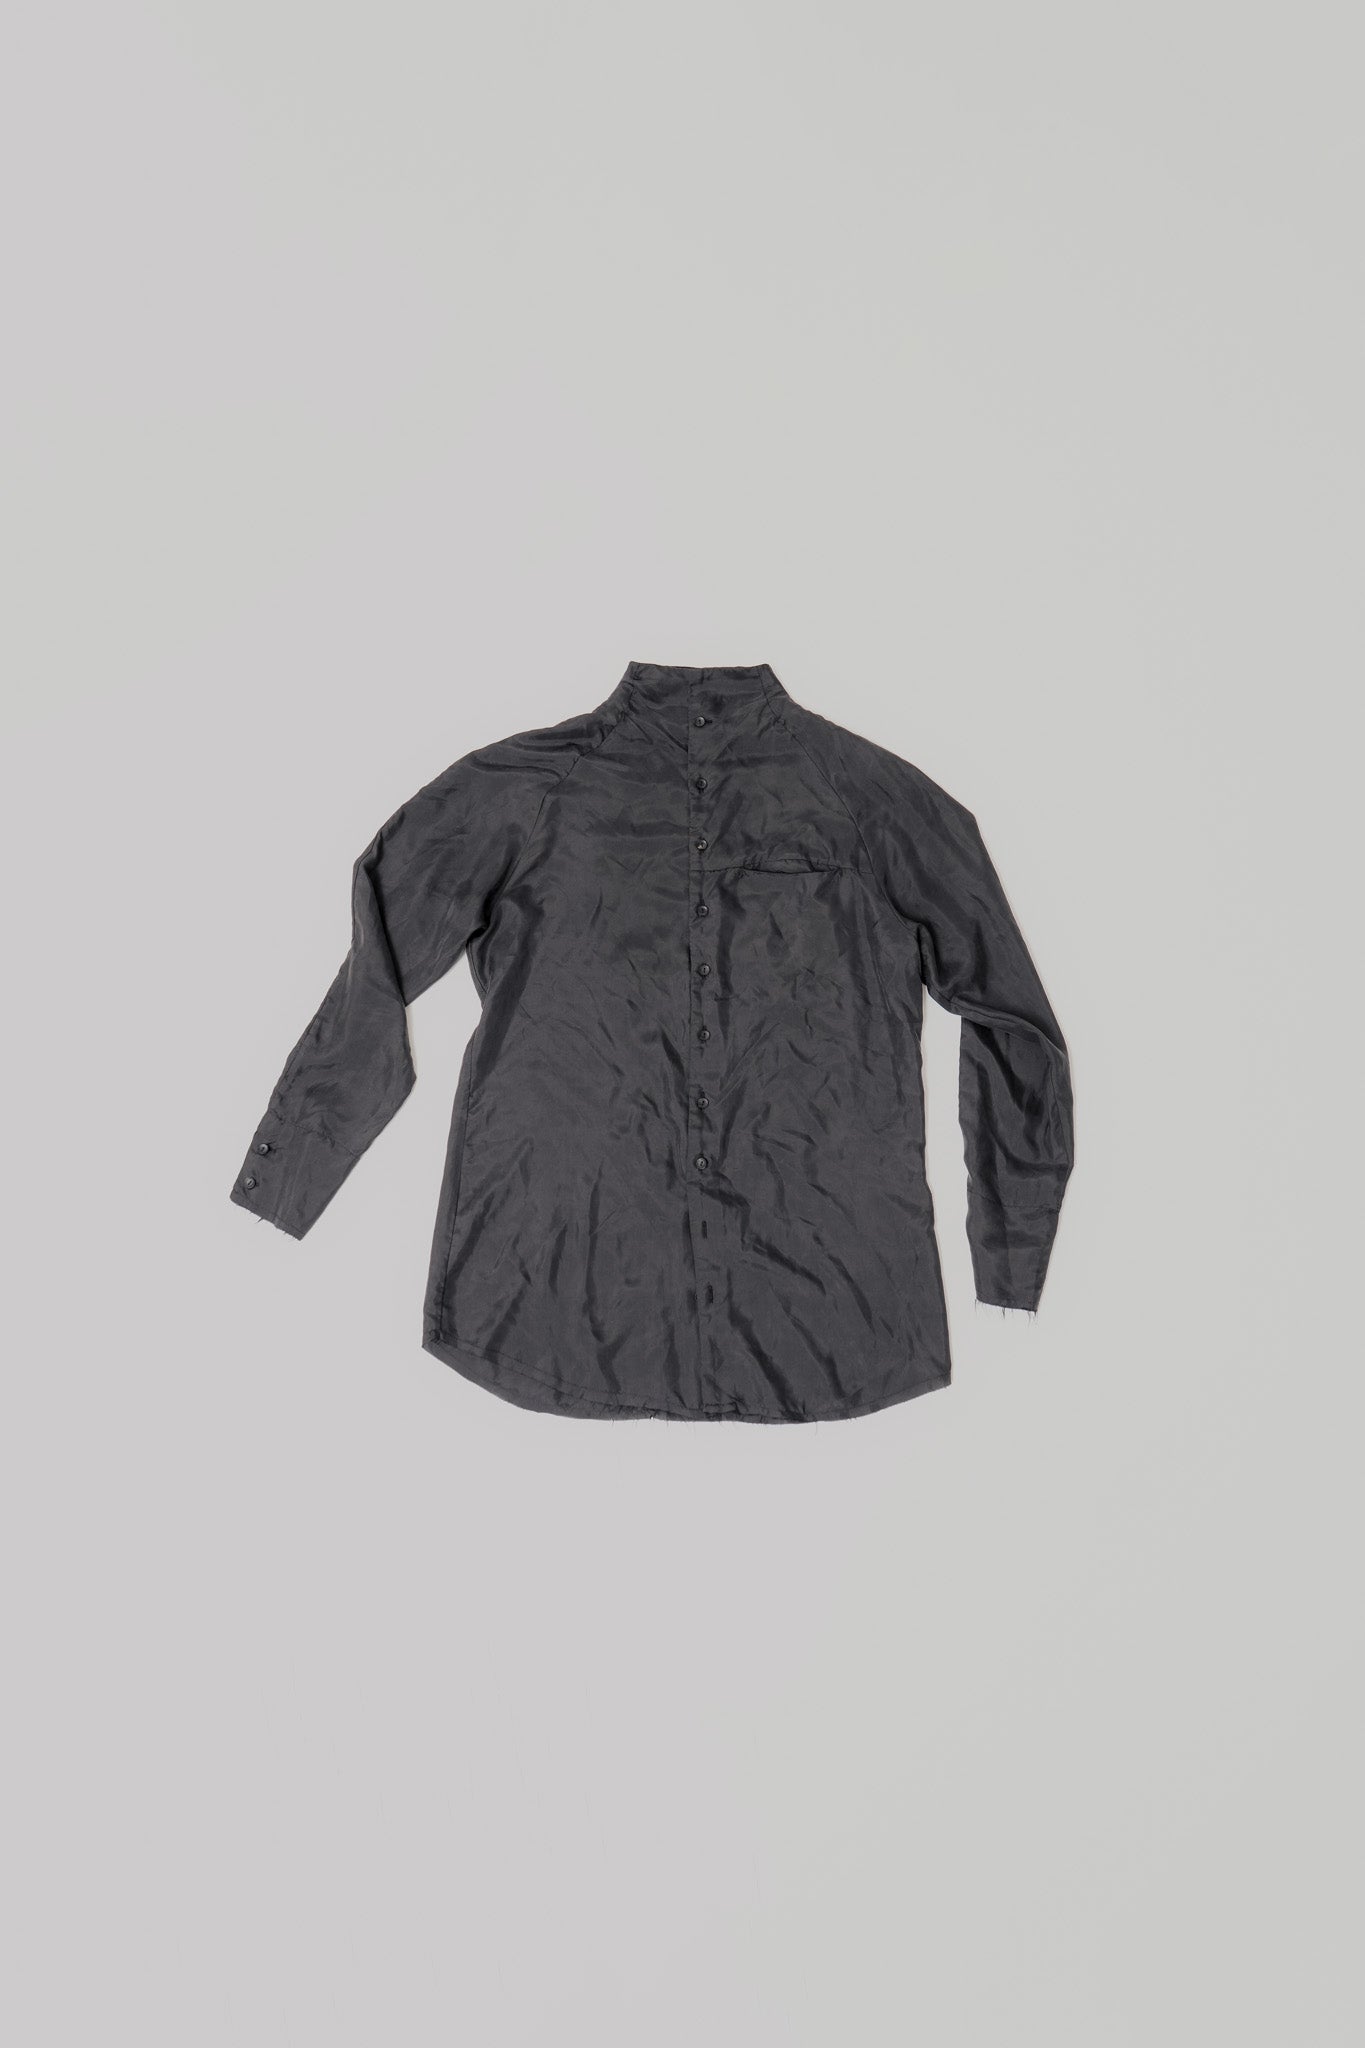 039 - High Neck Shirt in Silk